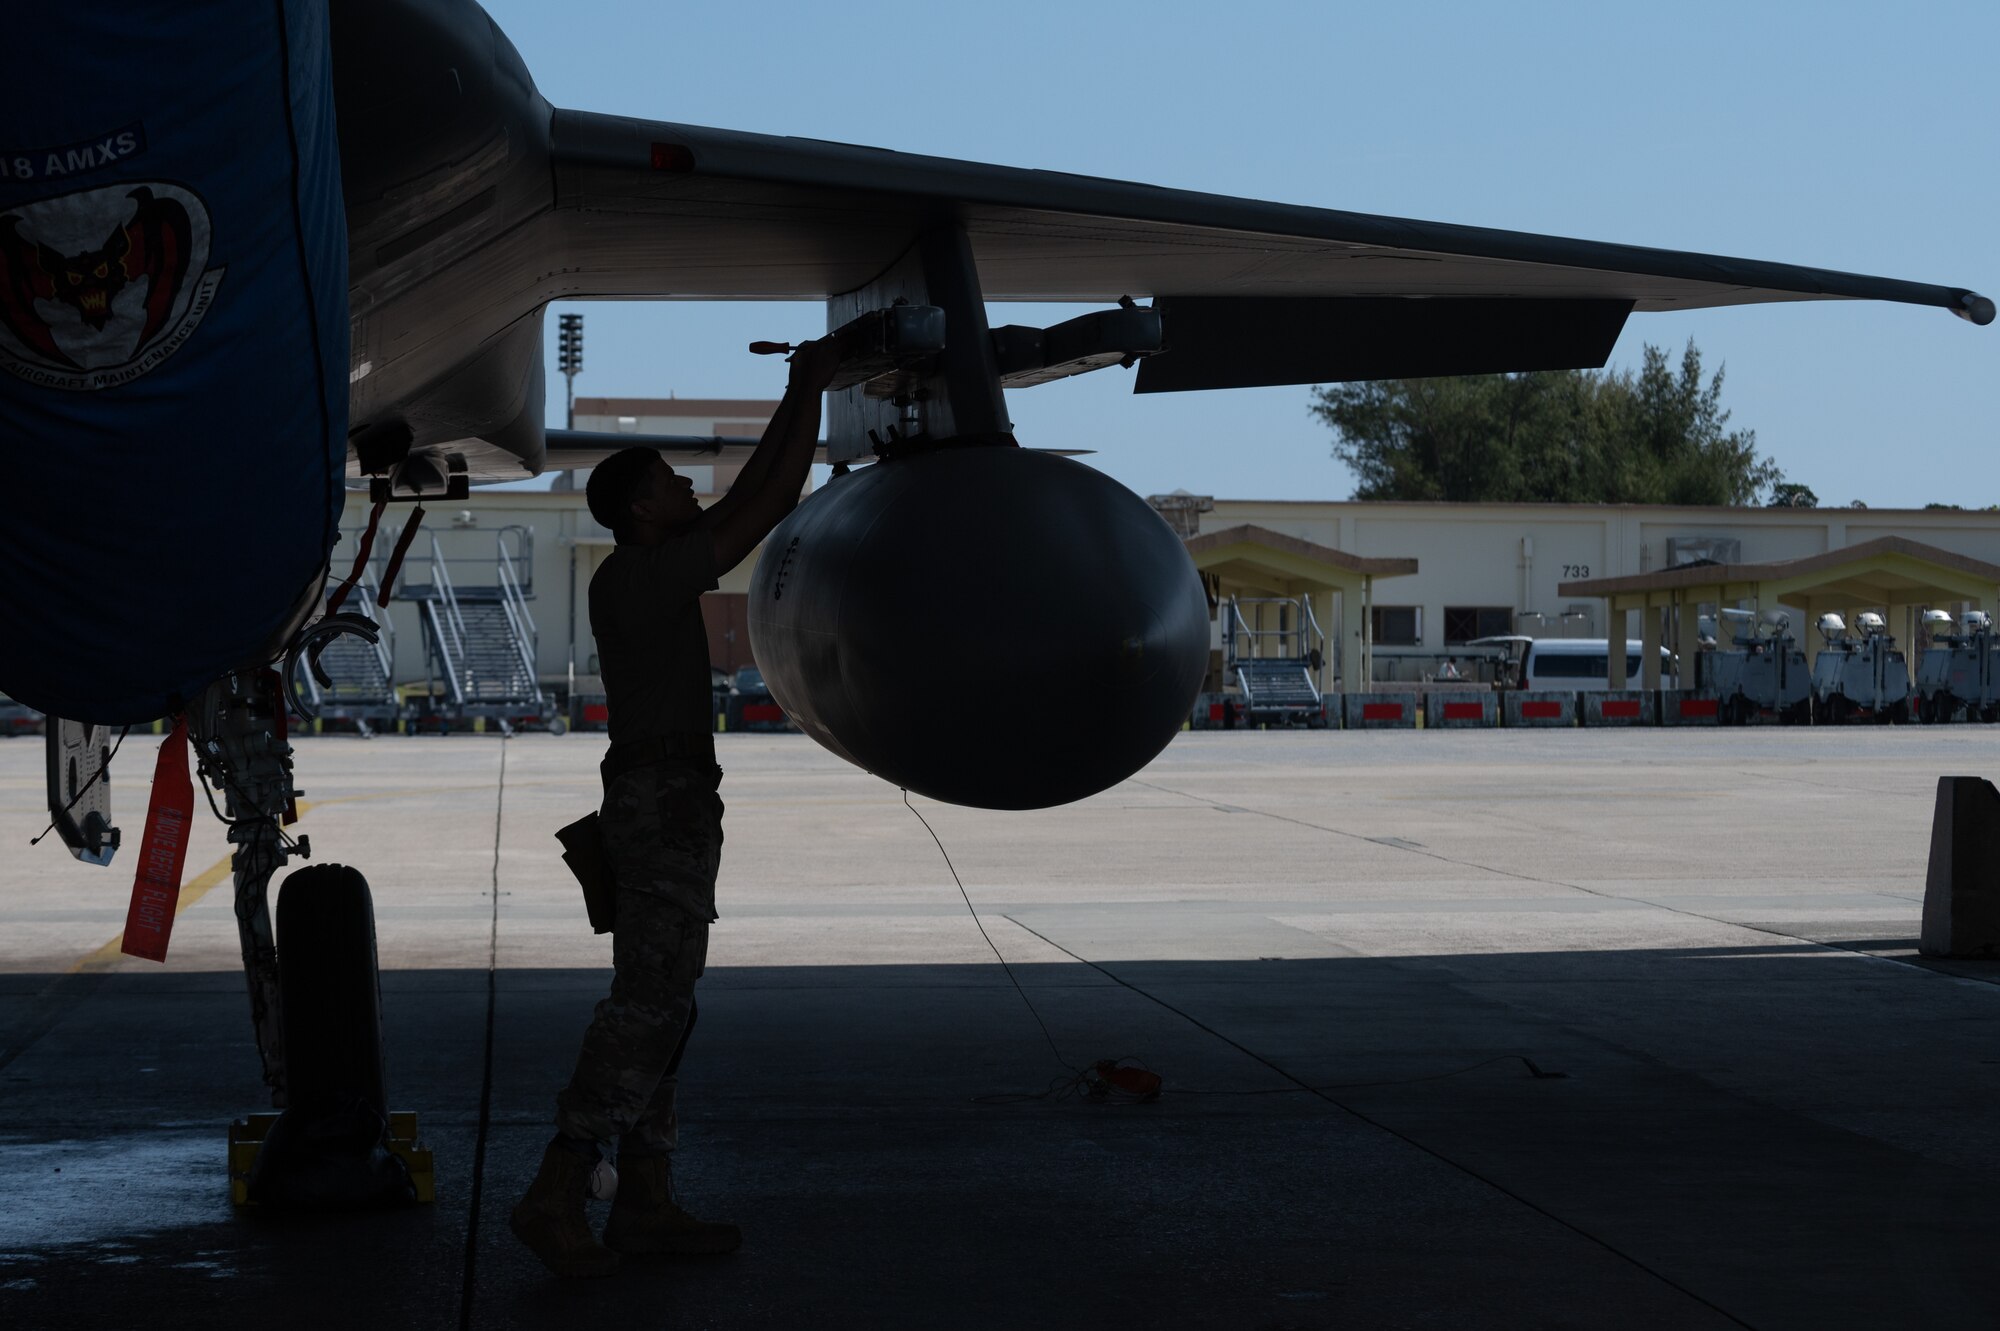 Airman performs maintenance on F-15